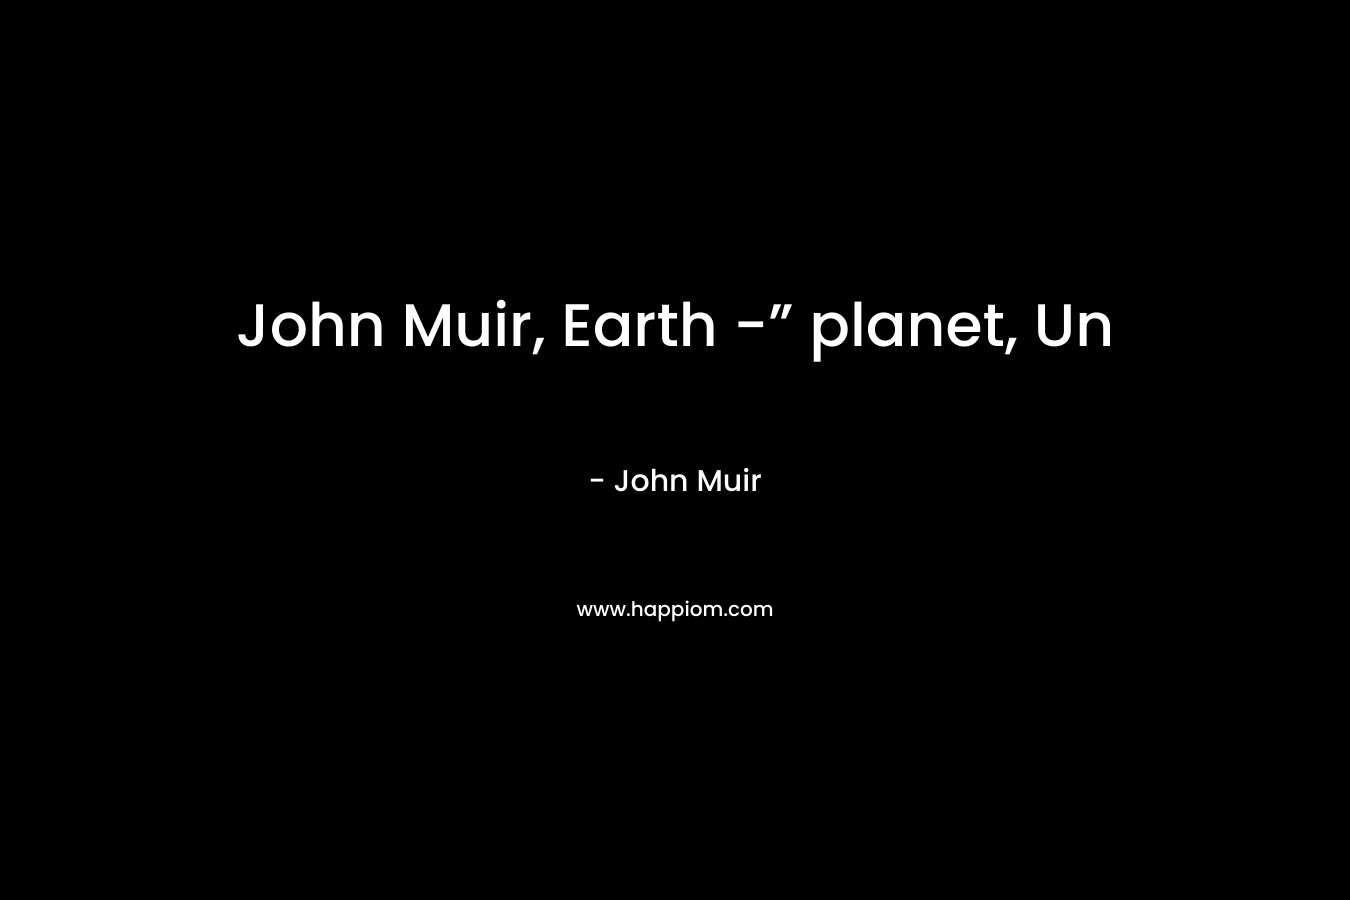 John Muir, Earth -” planet, Un – John Muir